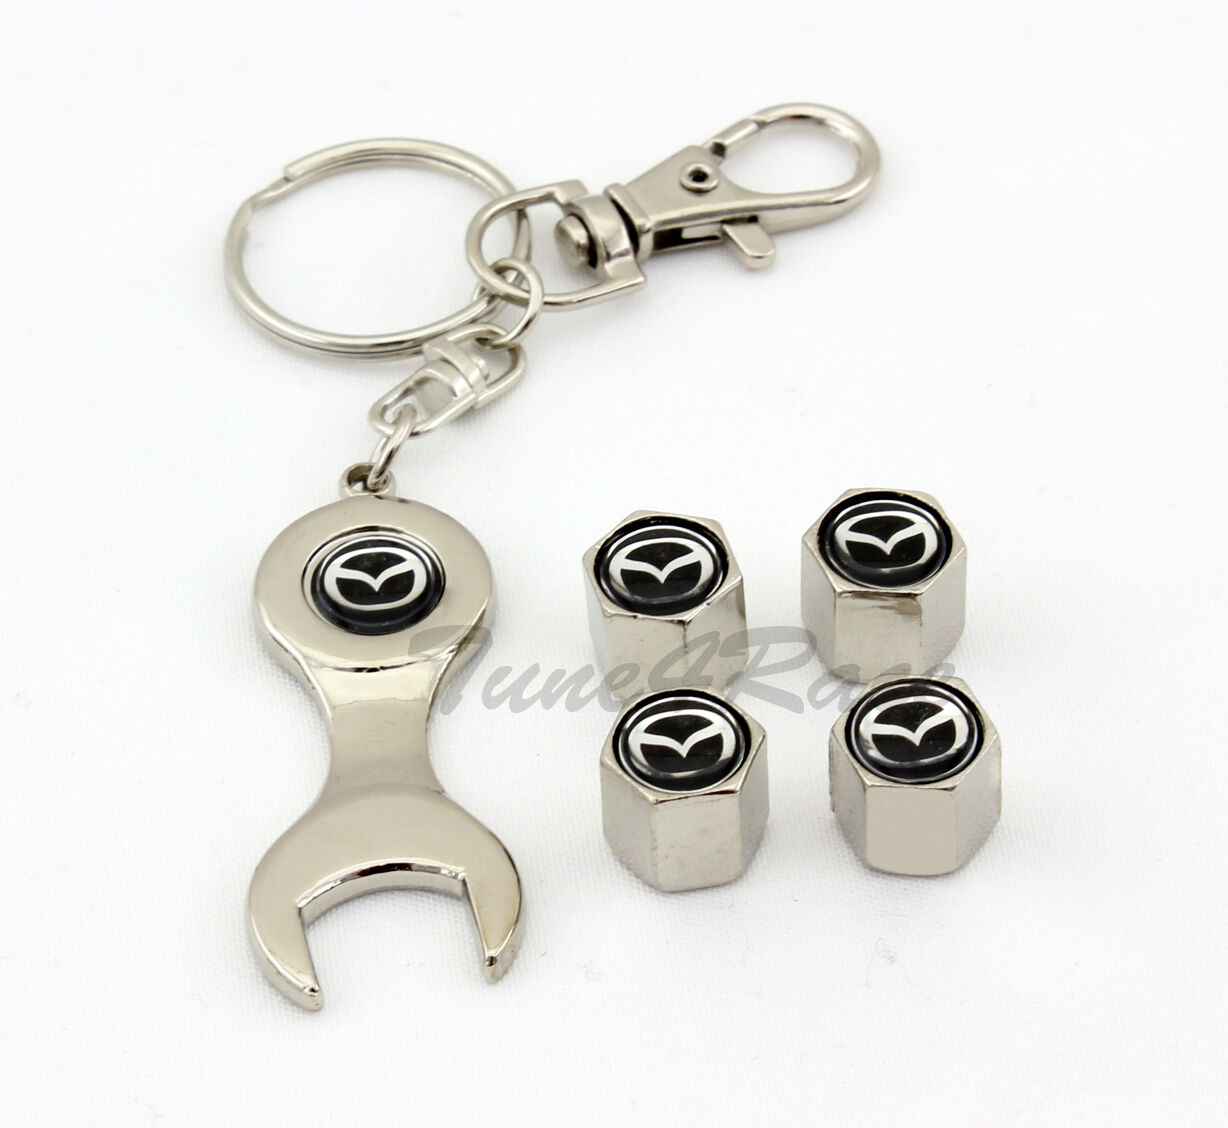 For Mazda logo Tire Wheel Valve Cap Stems & keychain Mazda 3 6 626 Capella